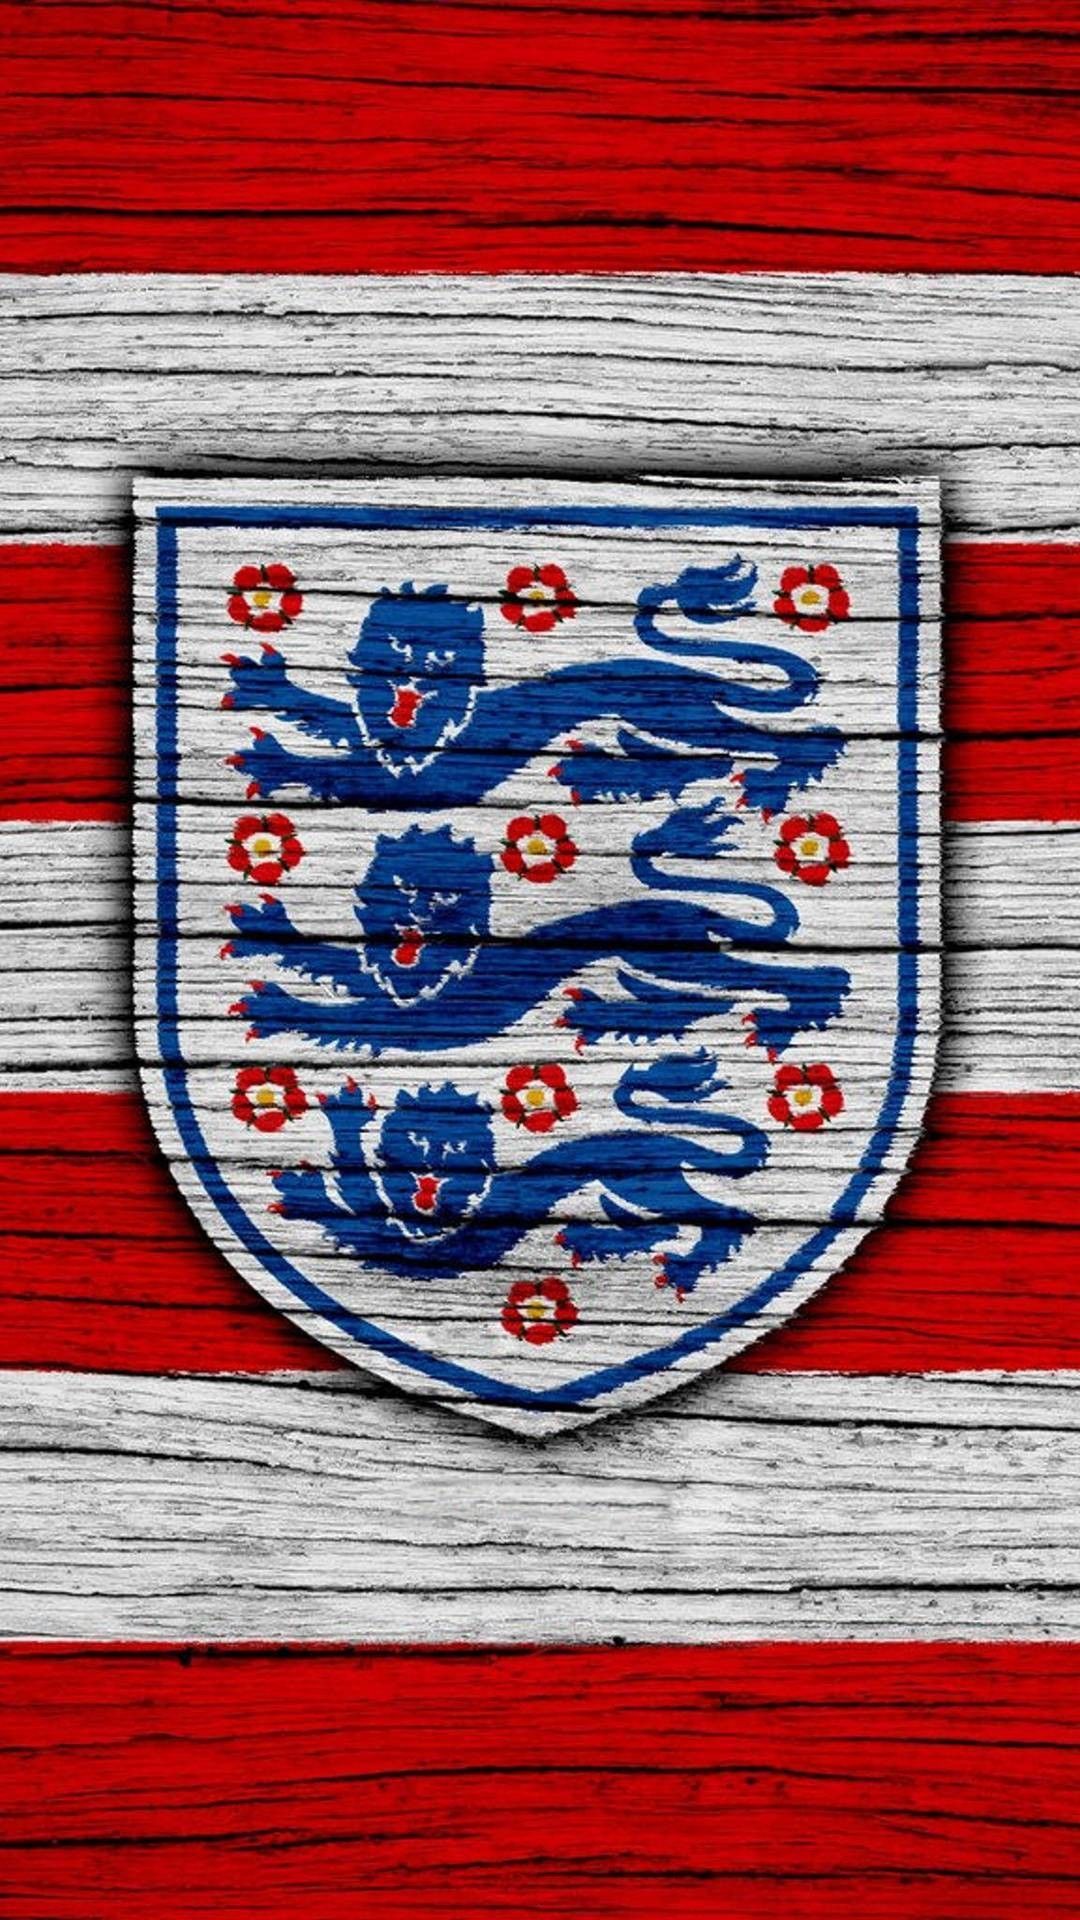 England pic wallpaper. England football, England national football team, England football team